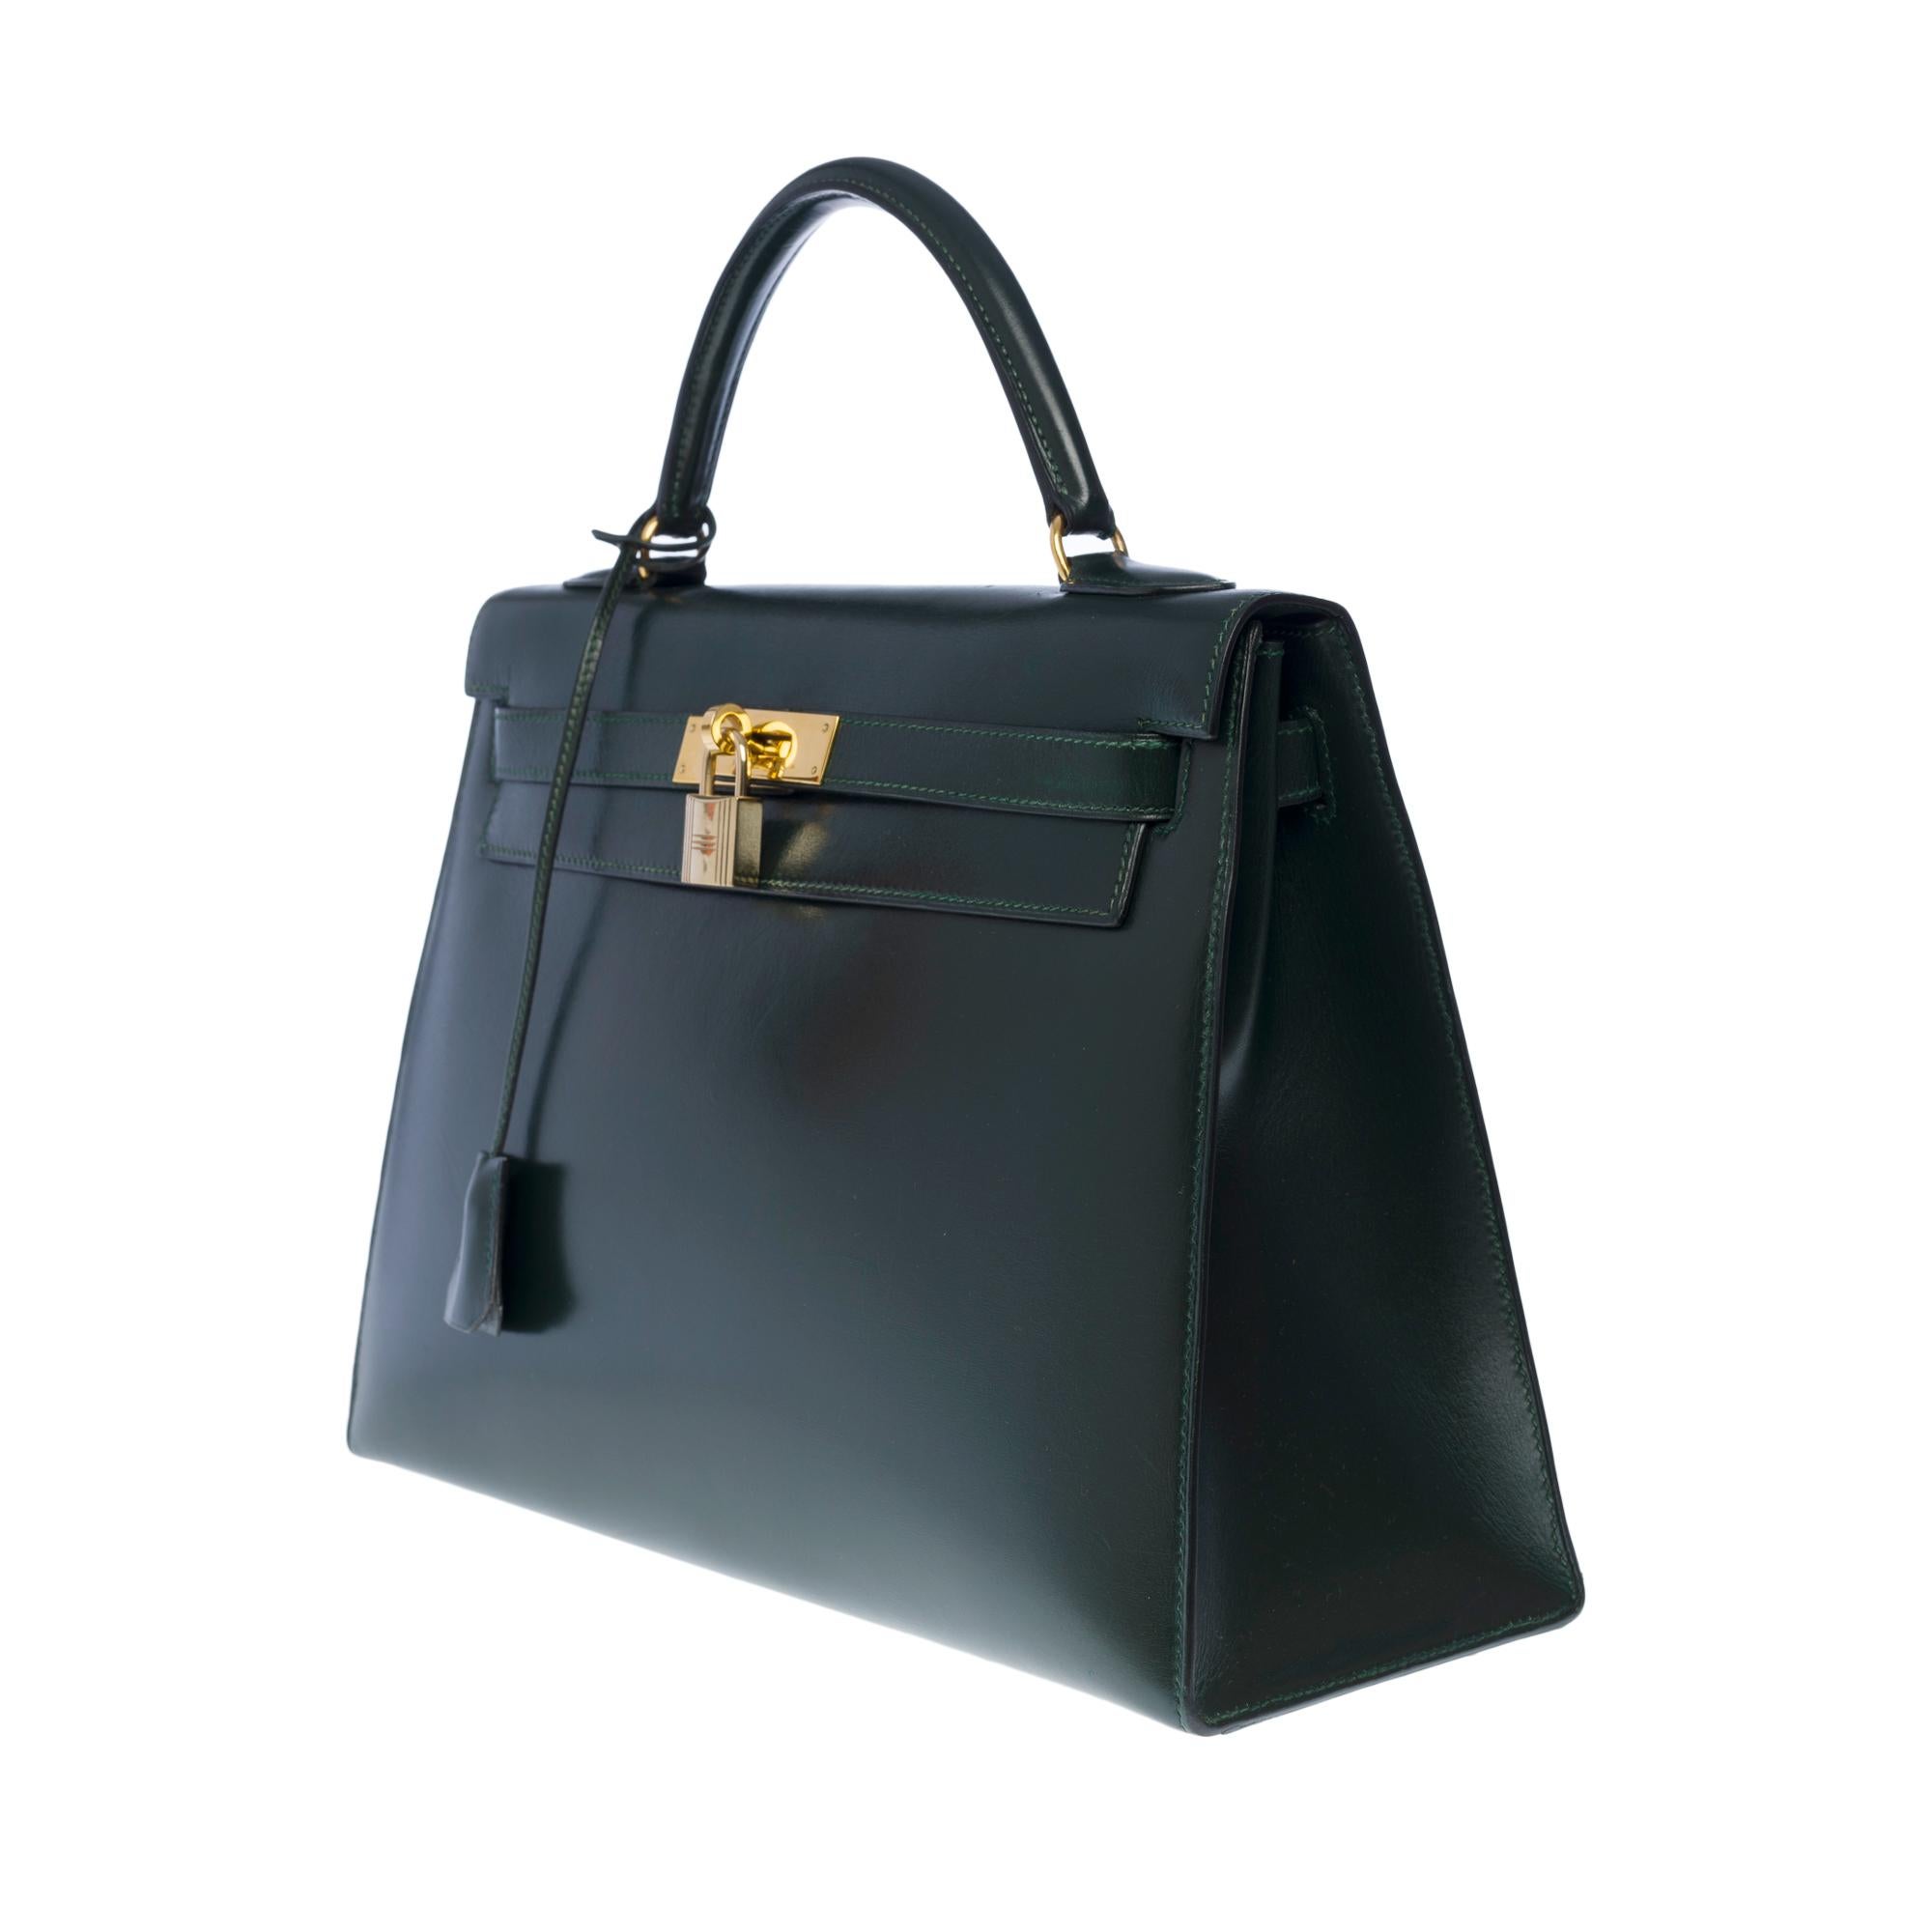 Rare Hermès Kelly 32 sellier handbag double straps in green box calf leather, GHW en vente 1